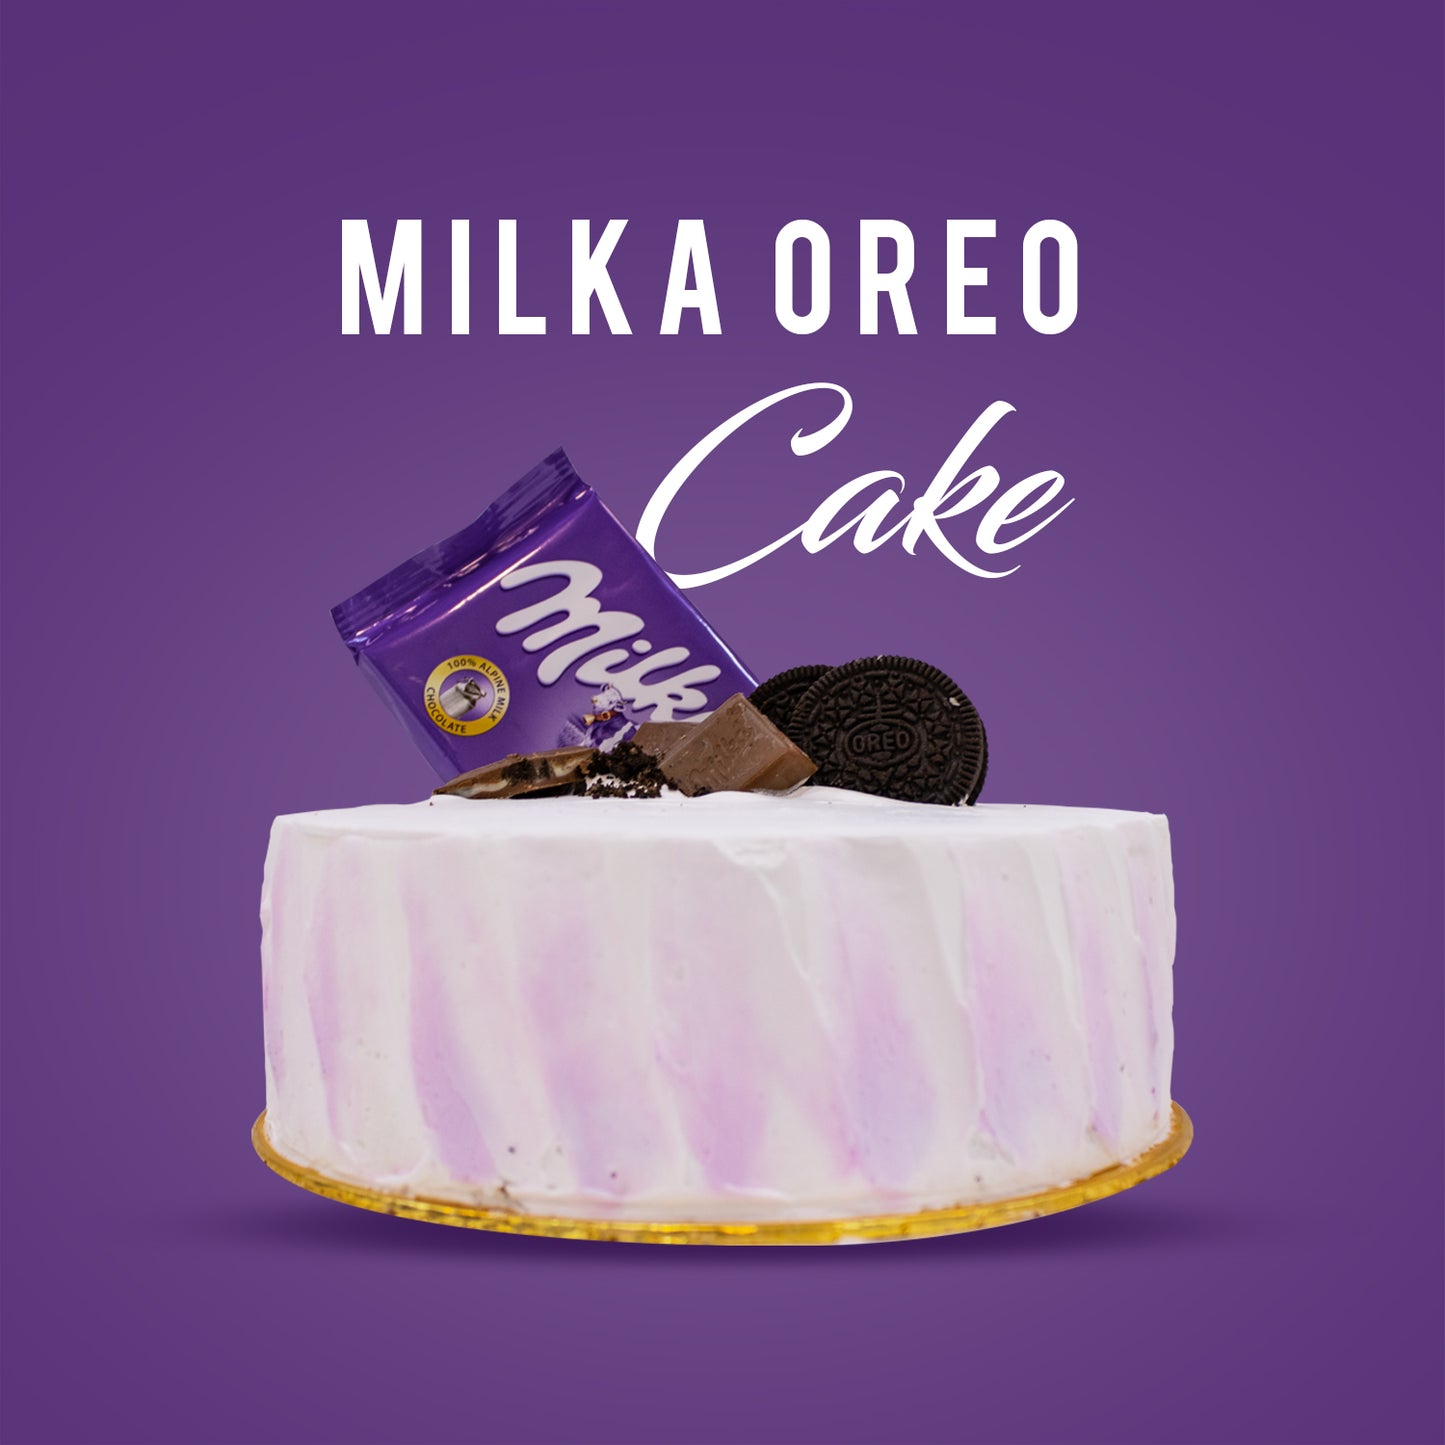 MIlka Oreo Cake